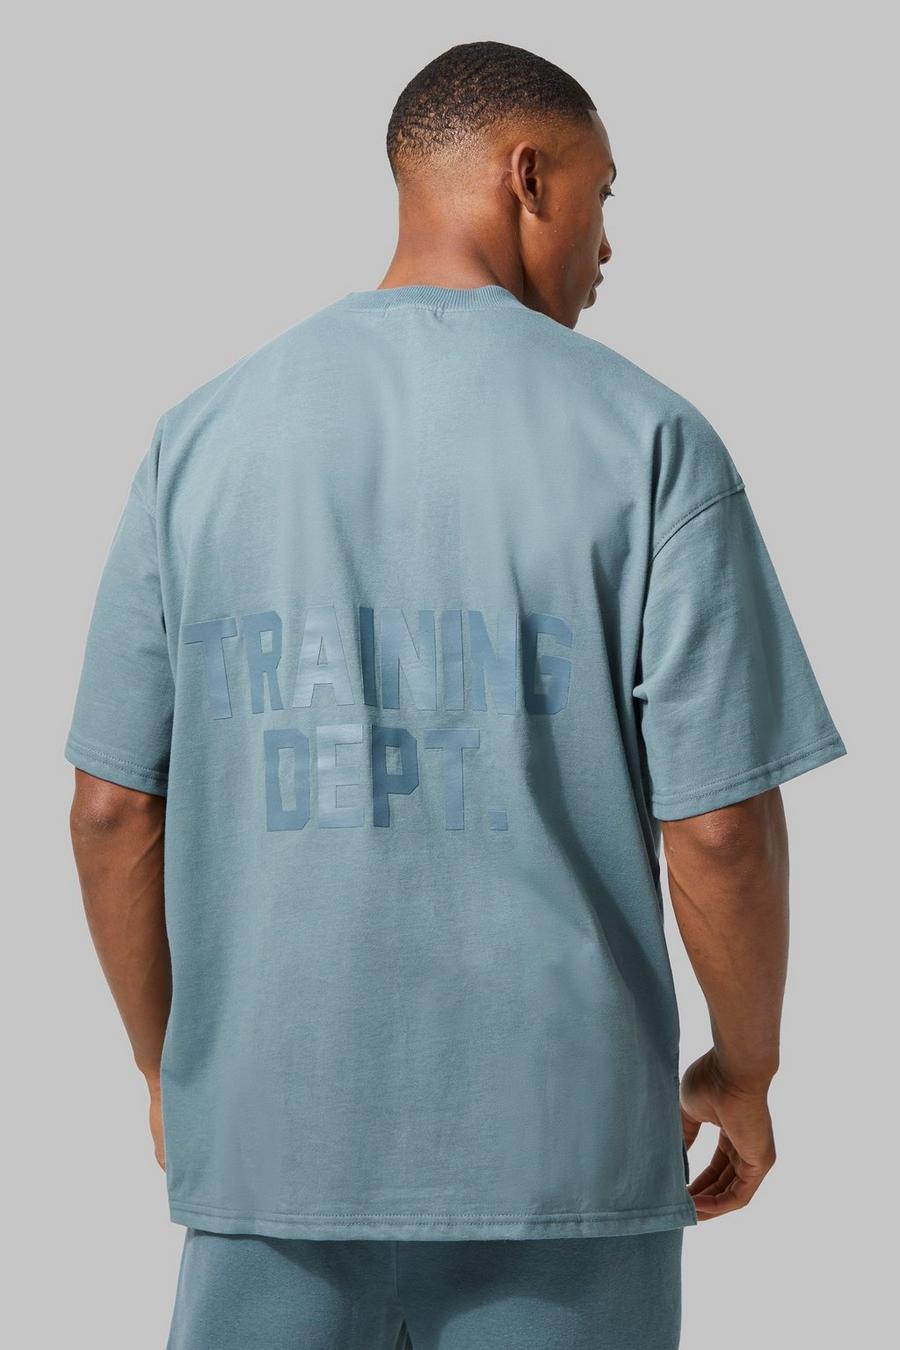 Camiseta Active oversize con estampado Training Dept, Slate blue image number 1